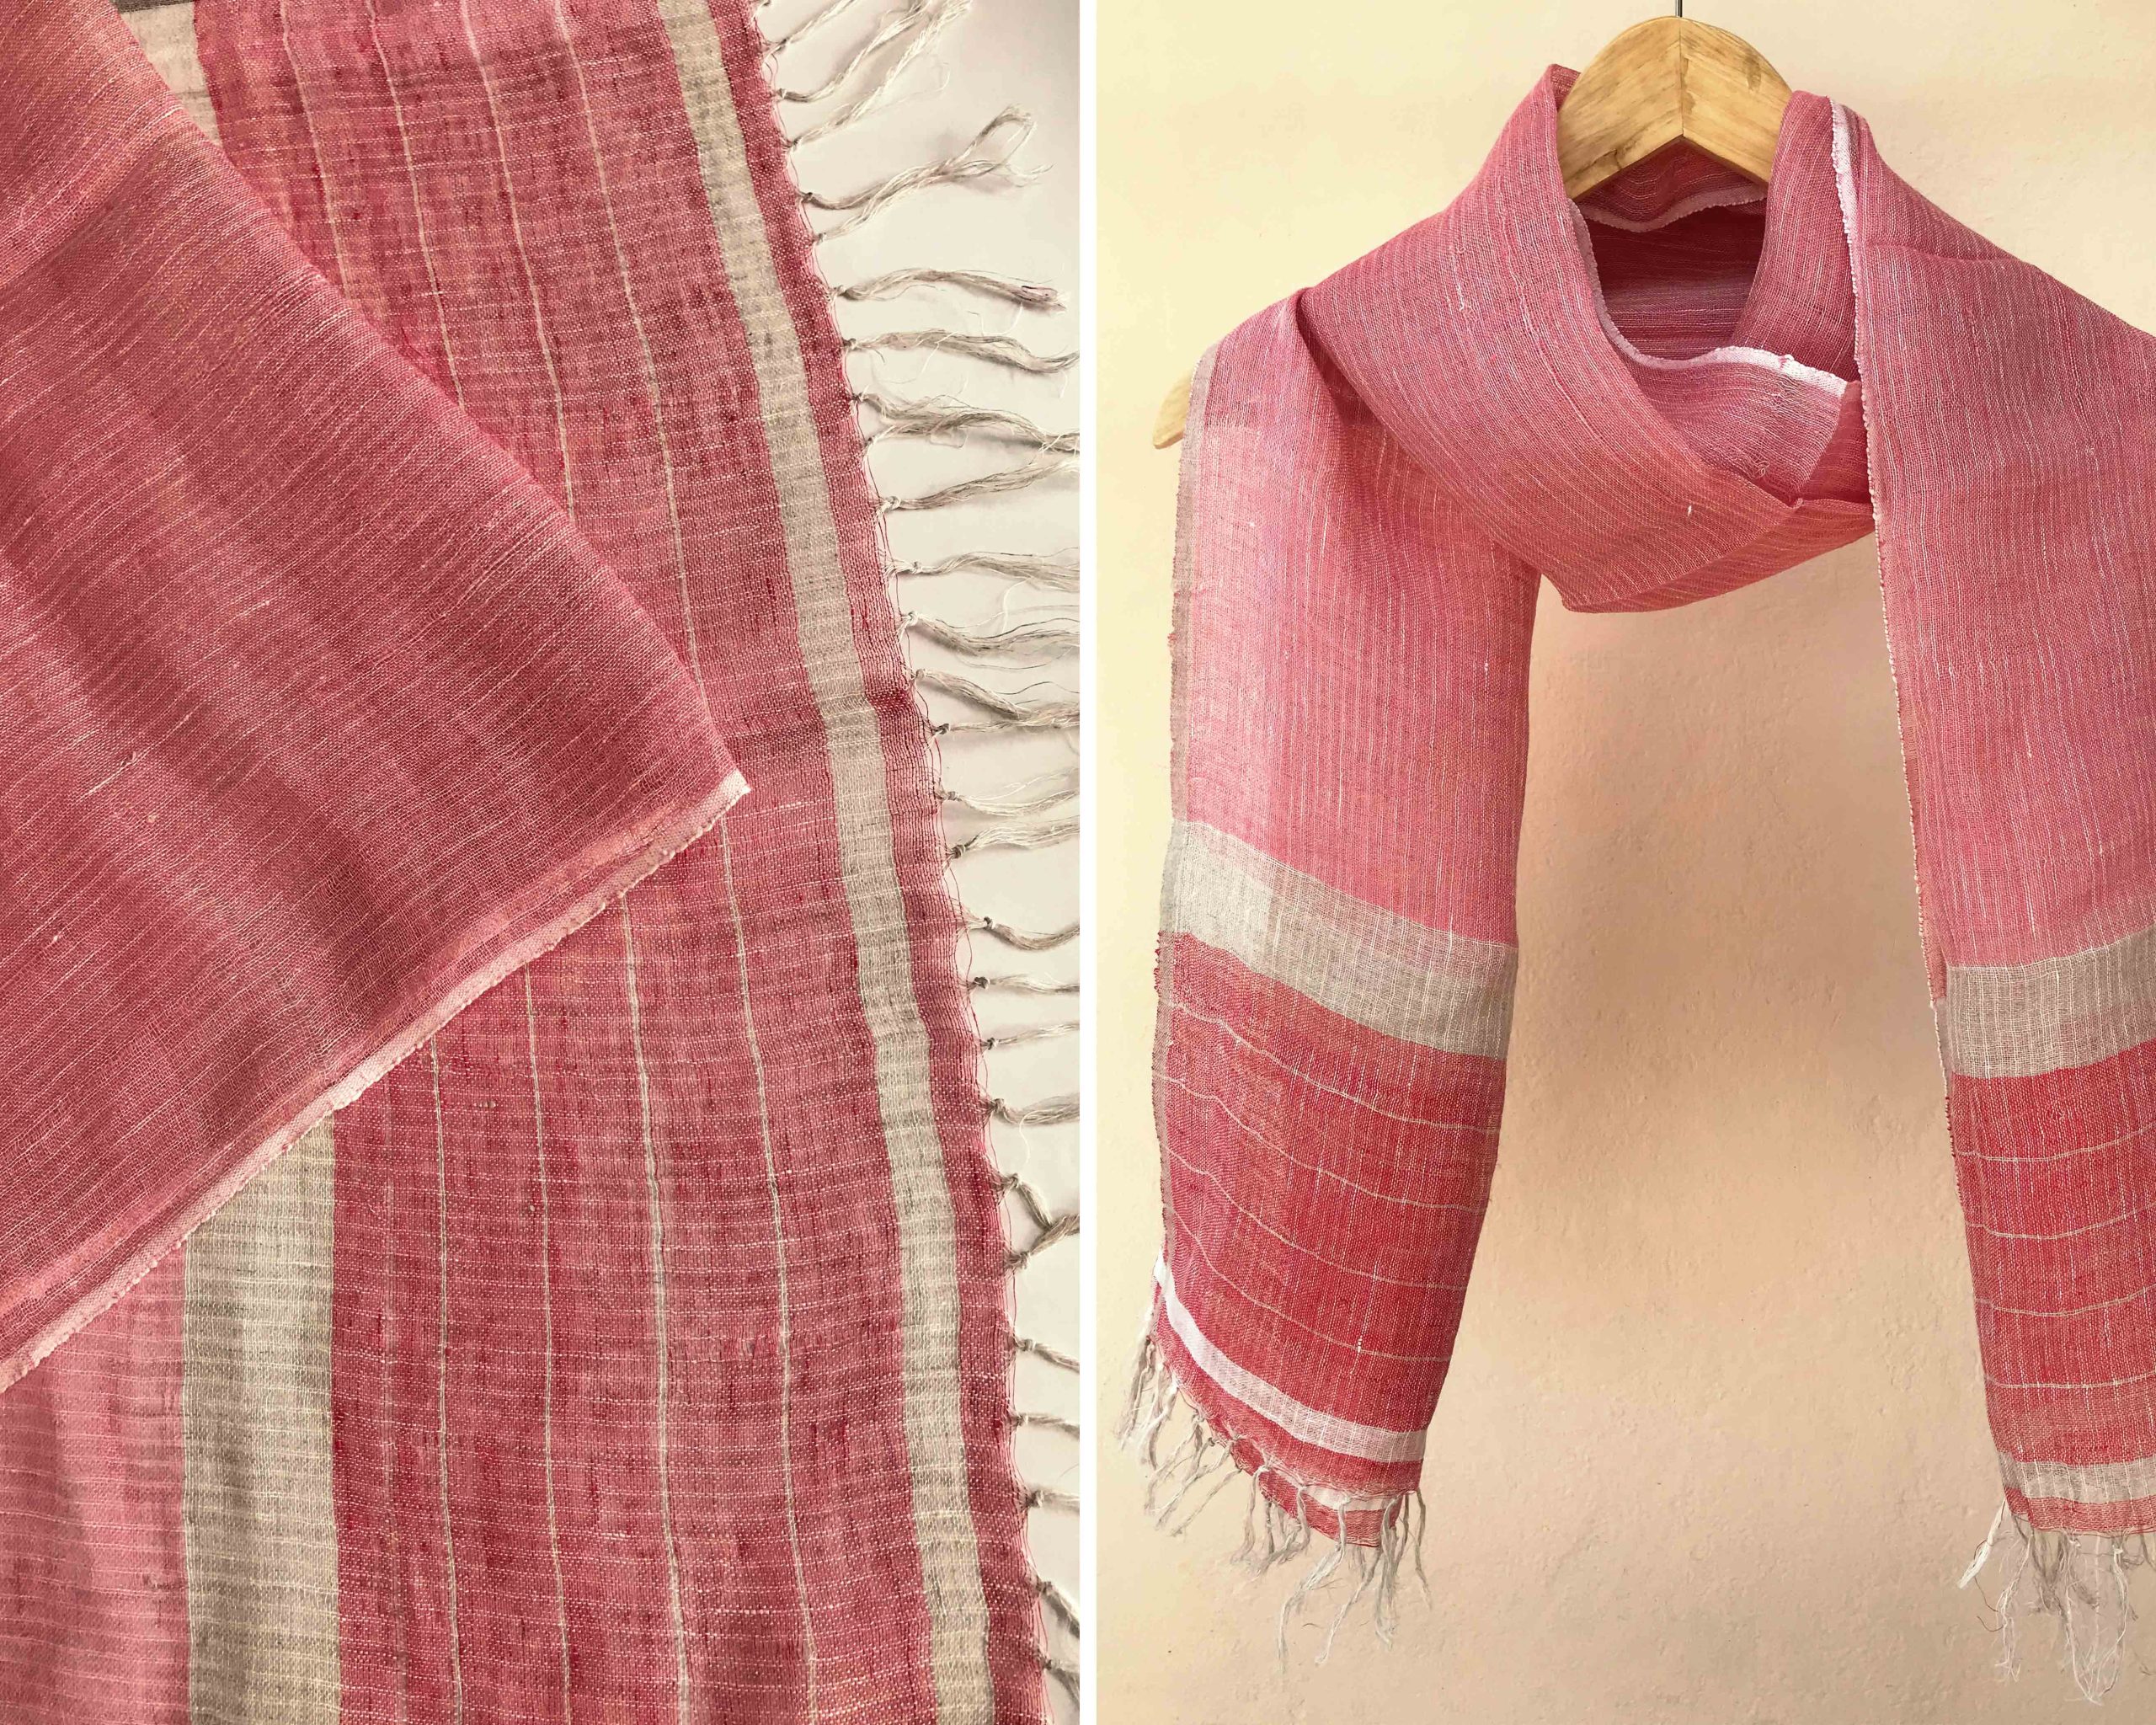 Handloom scarf : Linen Love